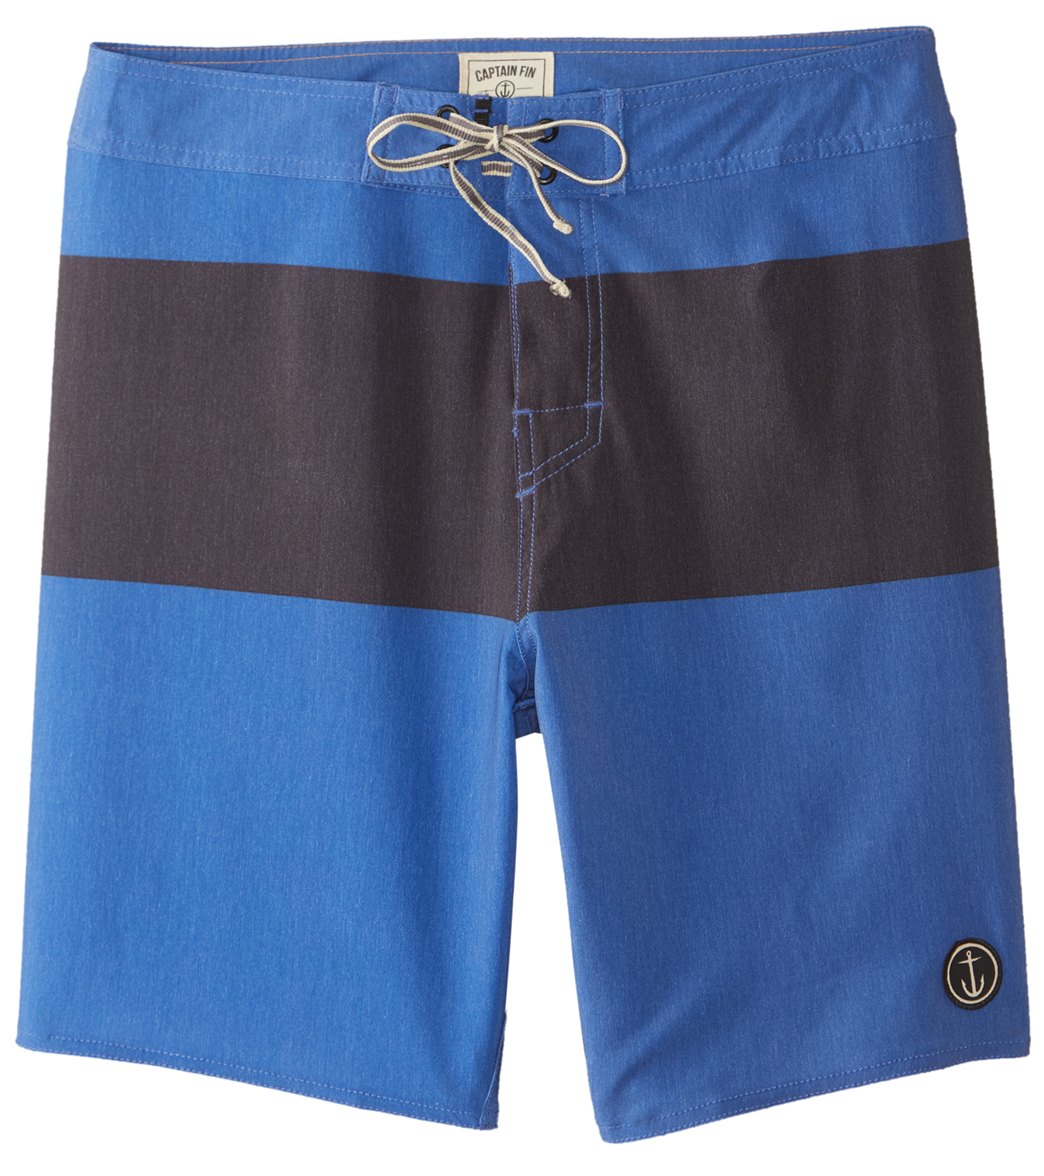 Captain Fin Men's Harry Boardshorts - Blue 28 Polyester/Elastane - Swimoutlet.com